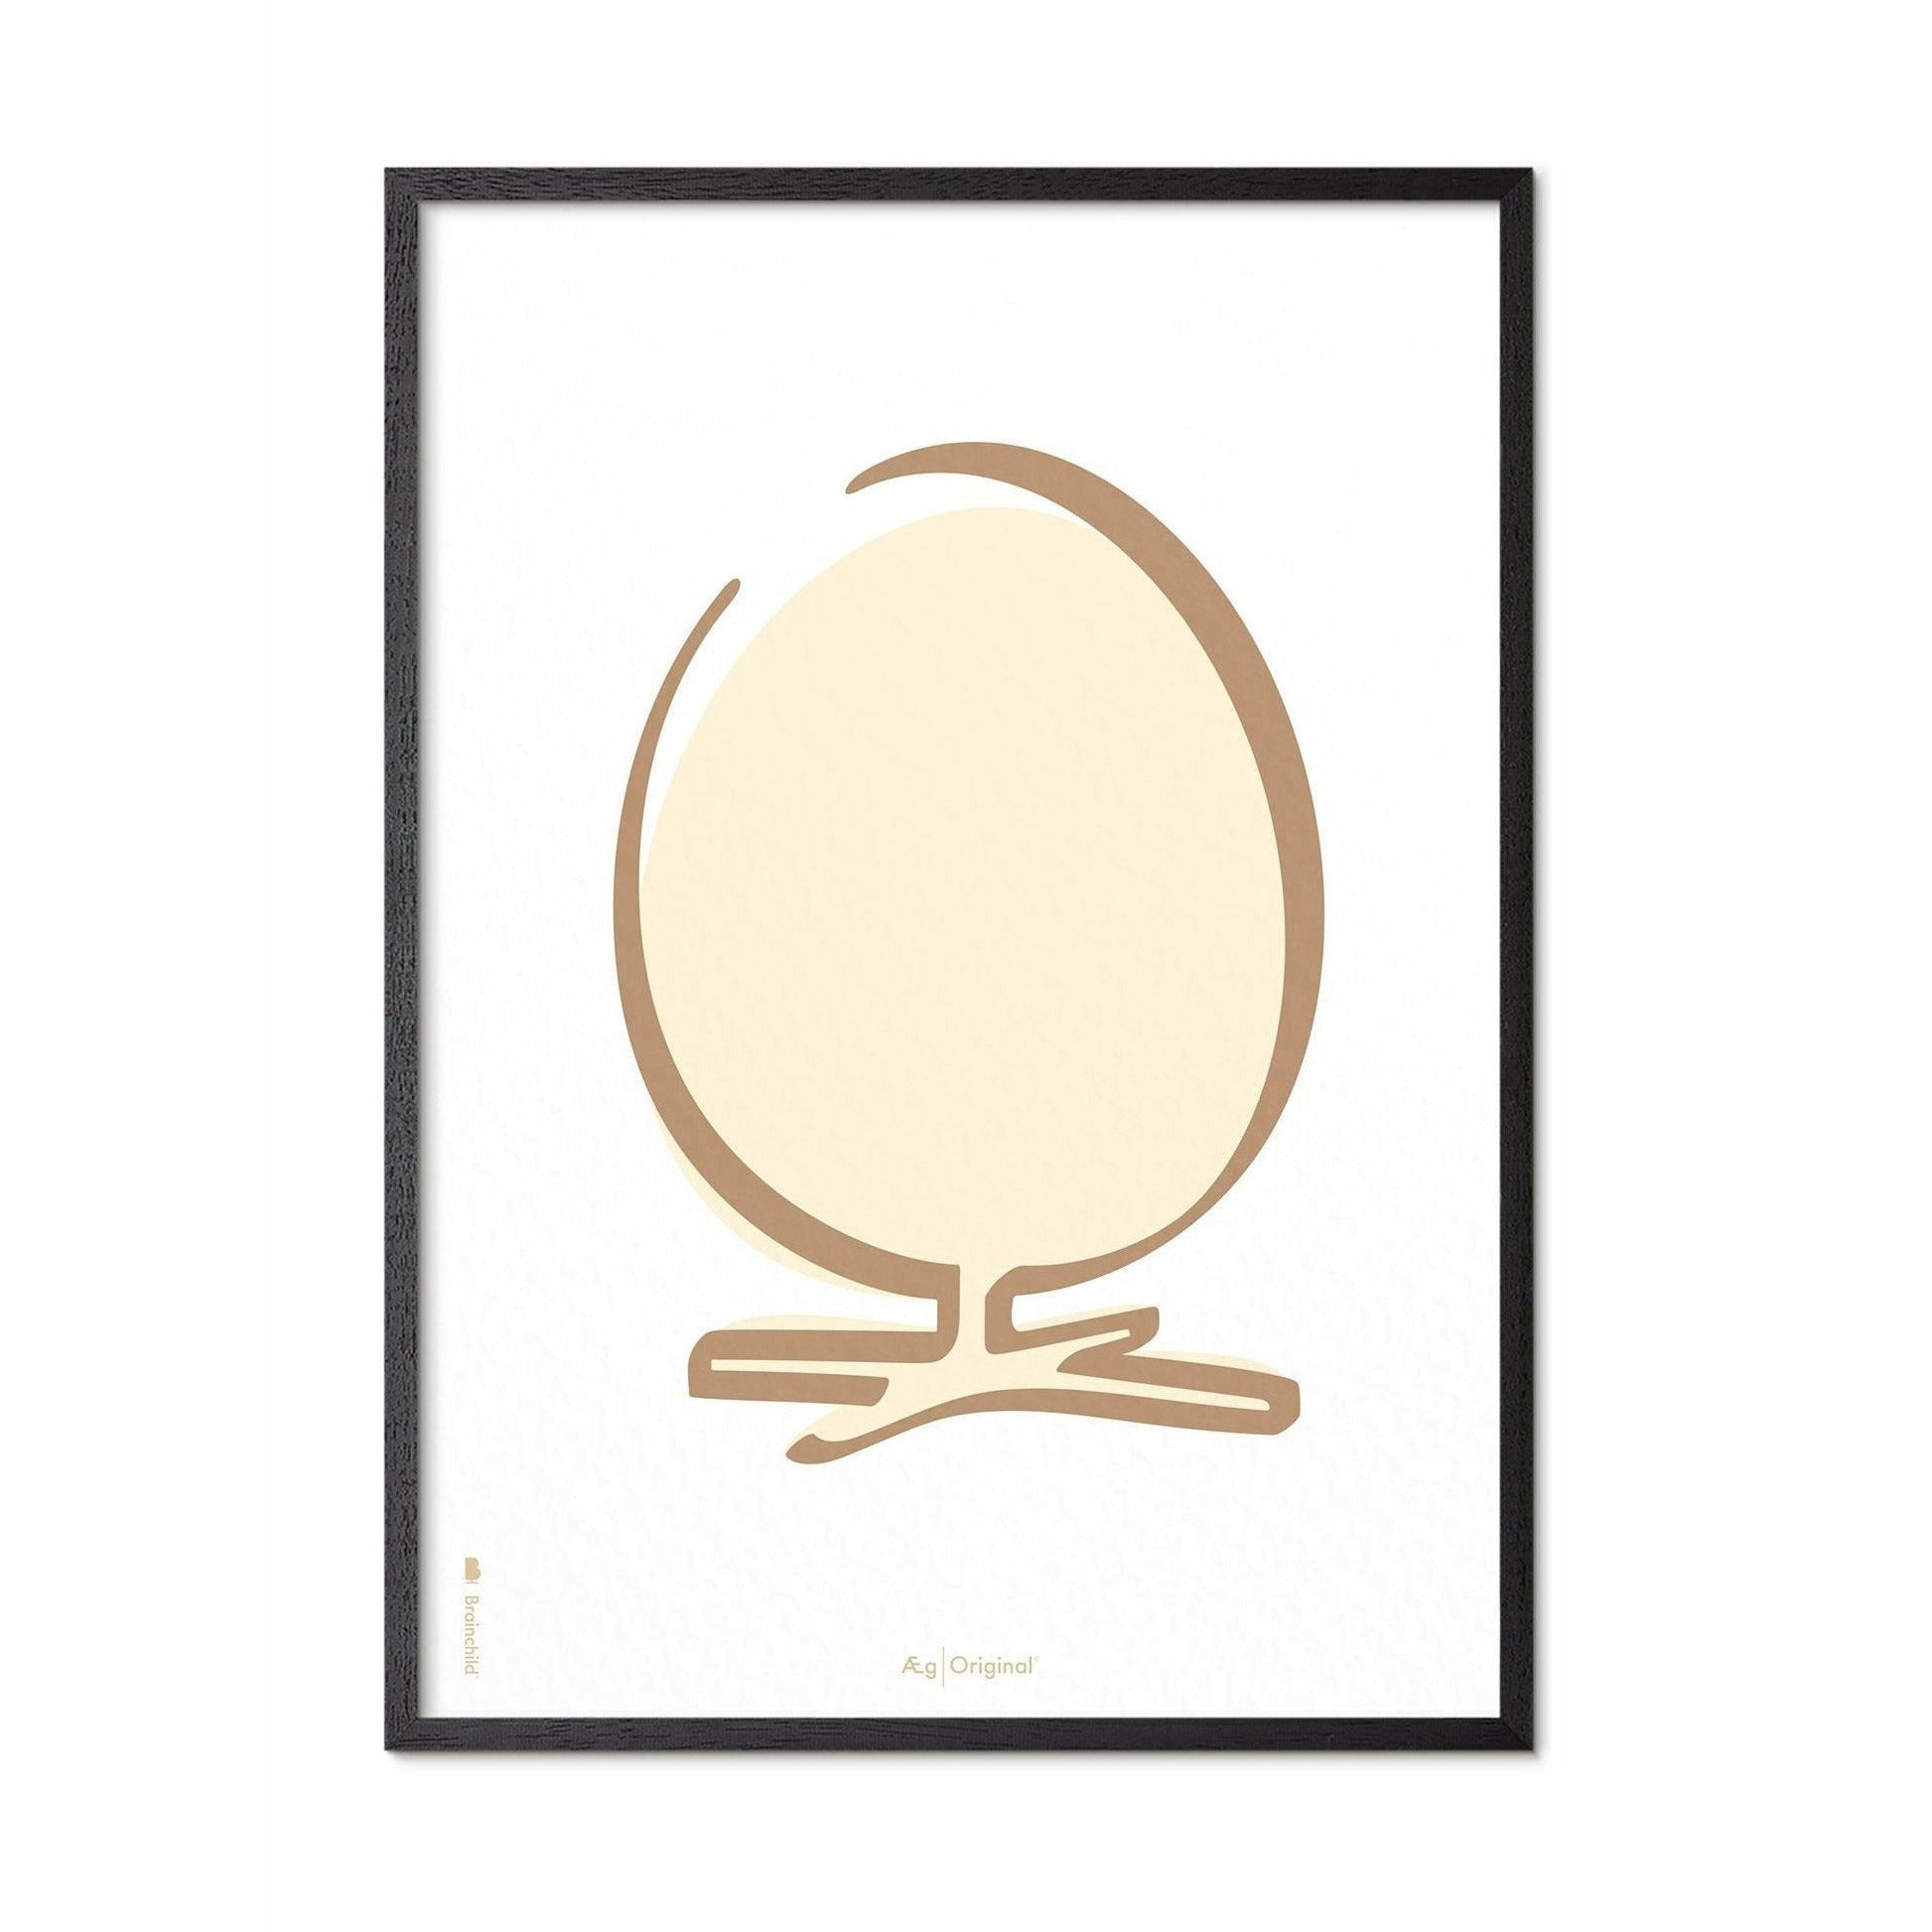 Póster de línea de huevo de precisión, marco en madera lacada negra A5, fondo blanco